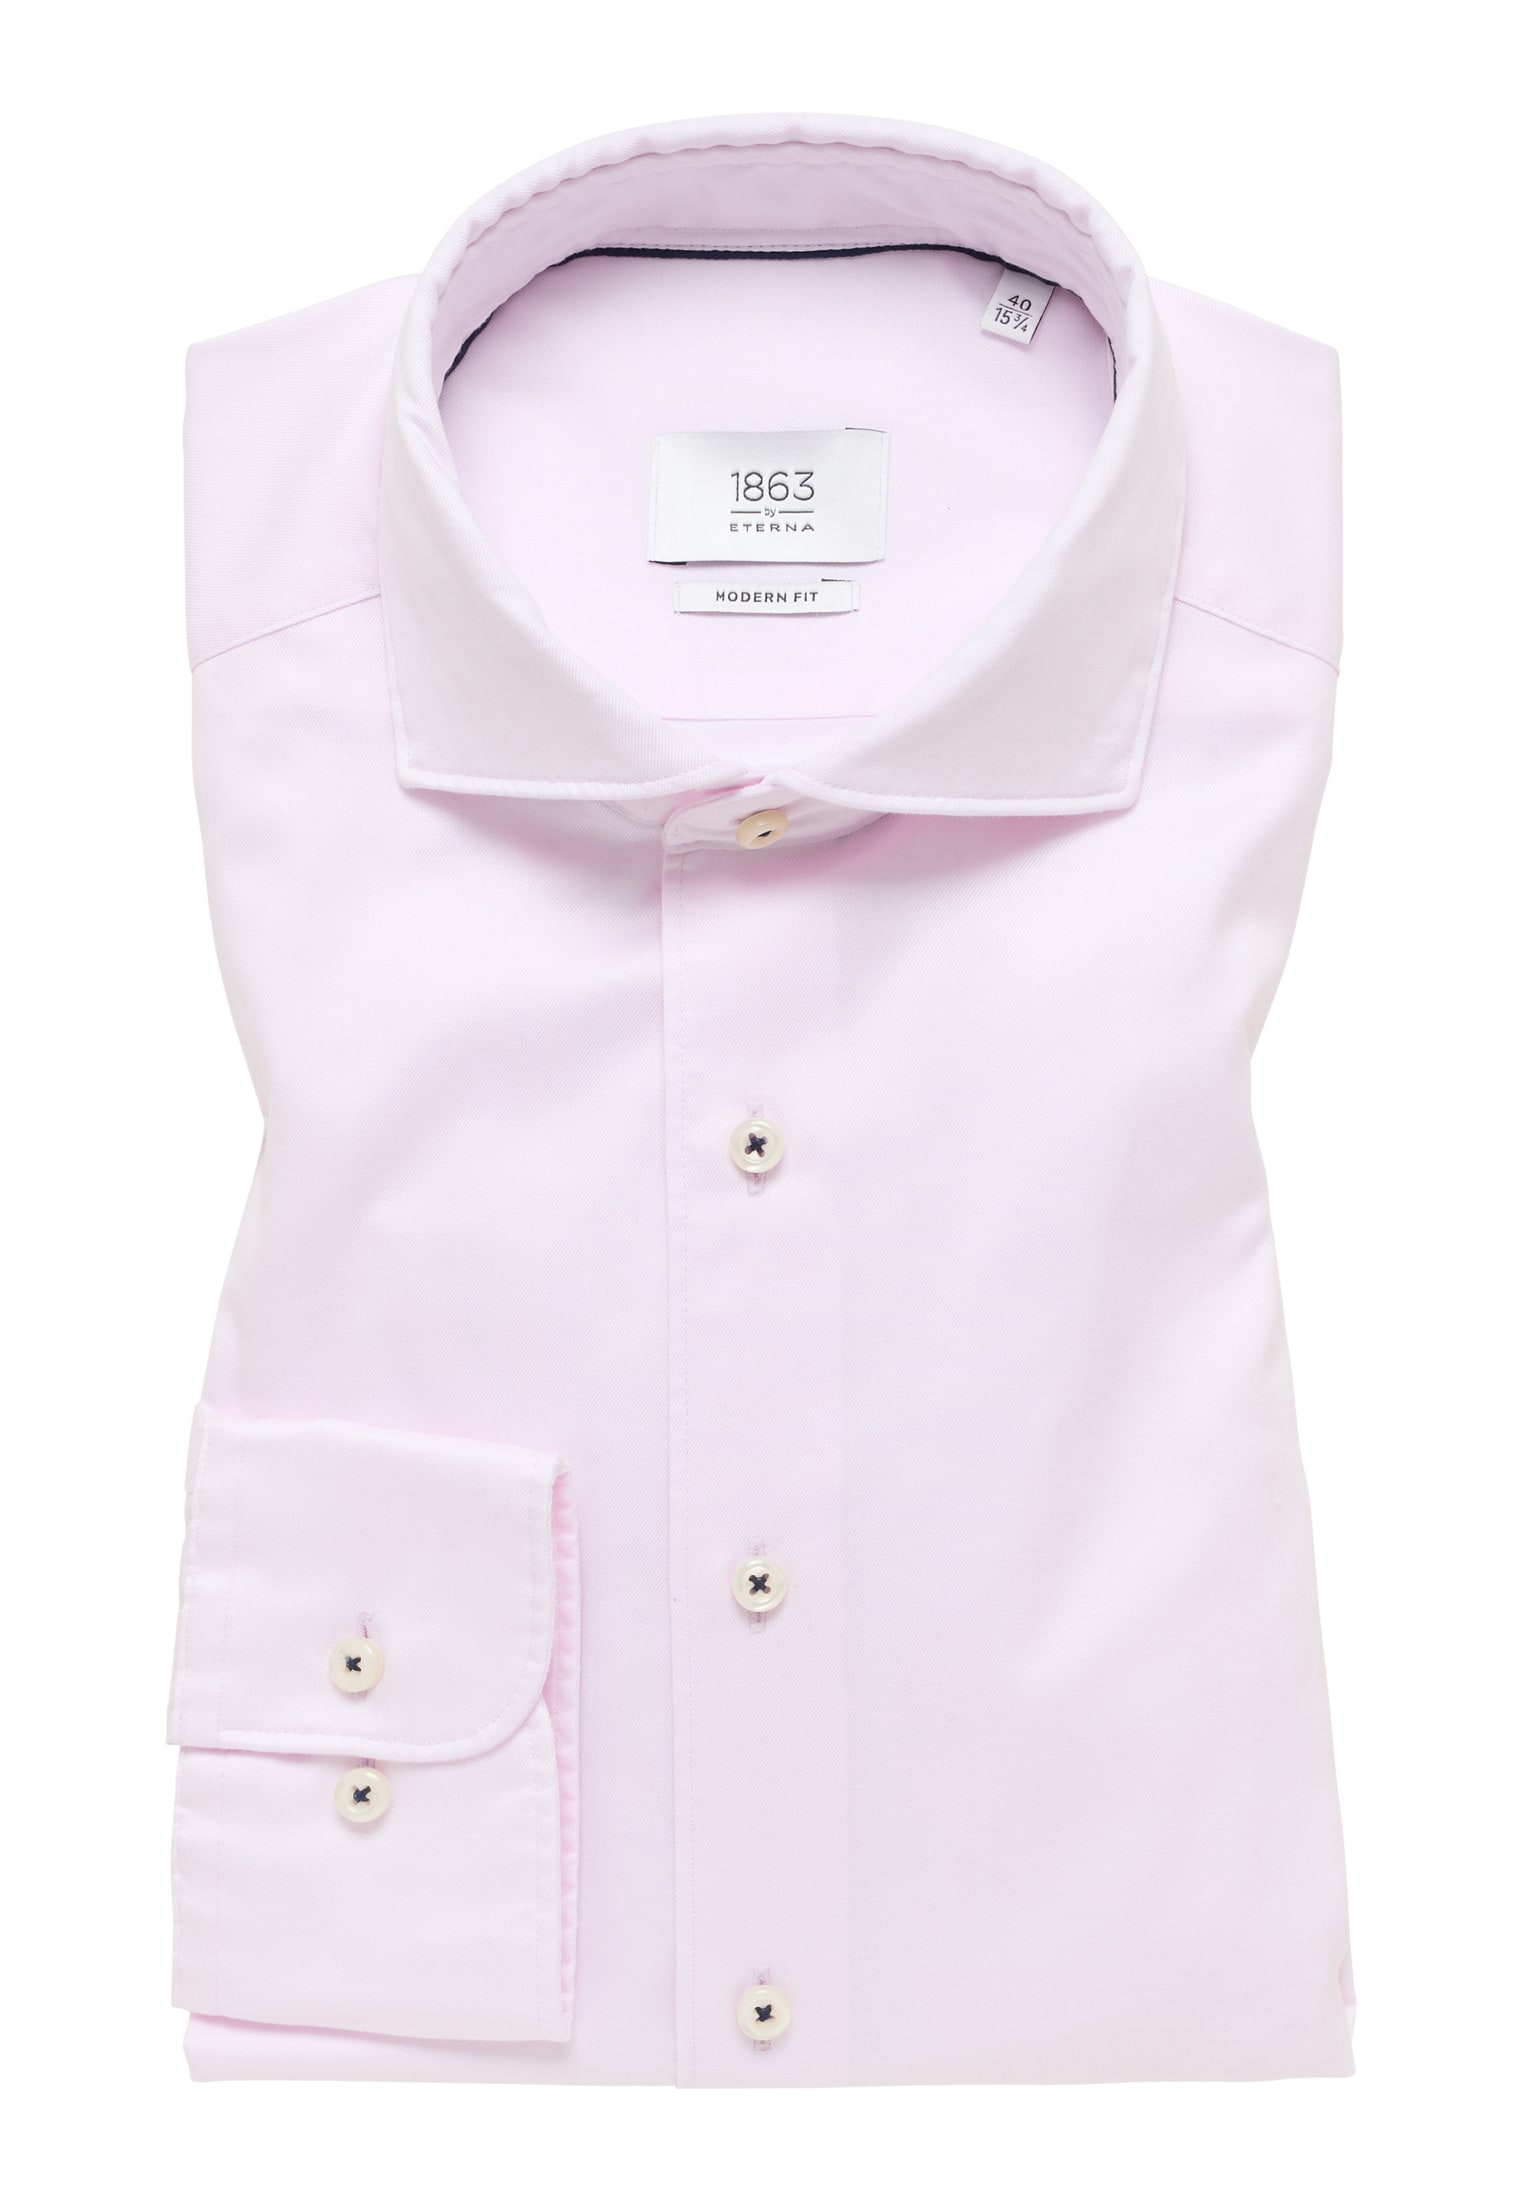 Shirt Luxury pink in | MODERN long 42 soft soft sleeve | pink plain FIT | 1SH03488-15-12-42-1/1 | Soft